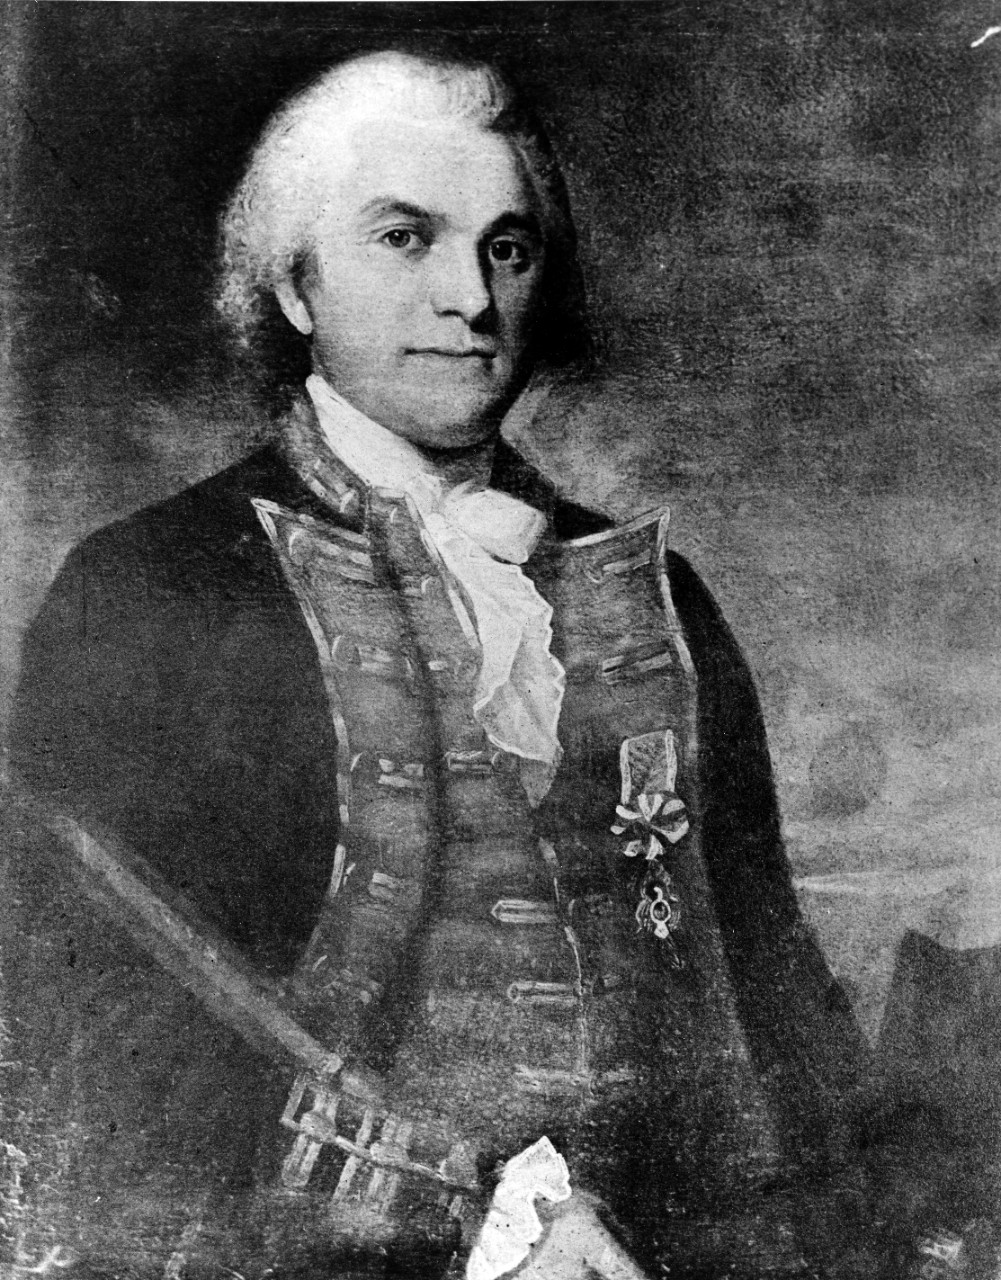 Commodore Silas Talbot, USN